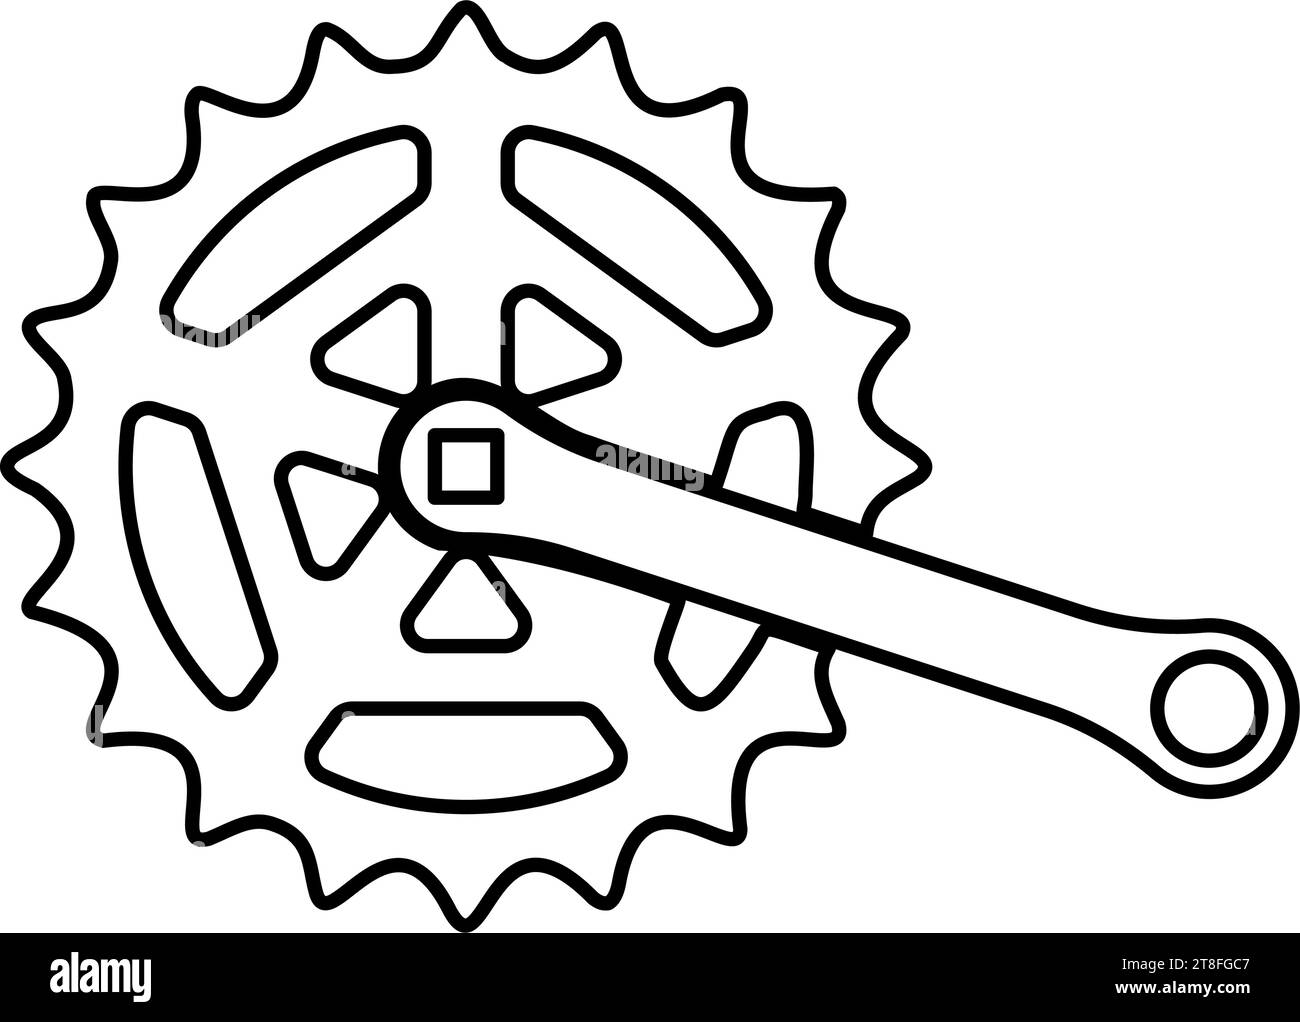 Crankset cogwheel sprocket crank length with gear for bicycle cassette system bike contour outline line icon black color vector illustration image Stock Vector